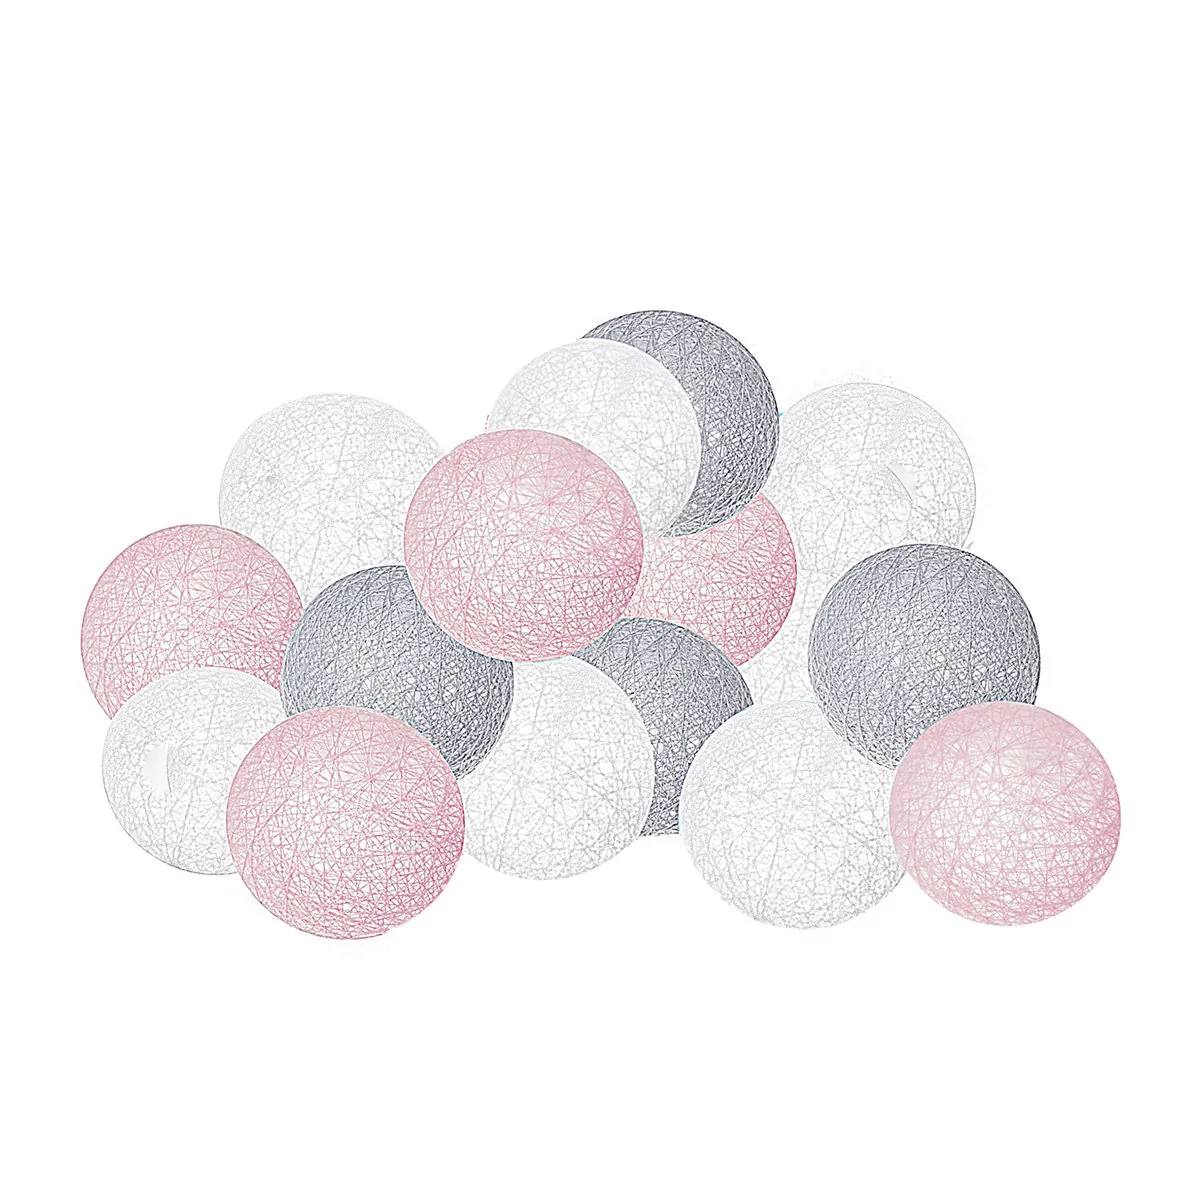 Lampki SPRINGOS CL0035 Cotton balls, 10xLED, 2,1 m, ciepłe białe, różowo-biało-szare